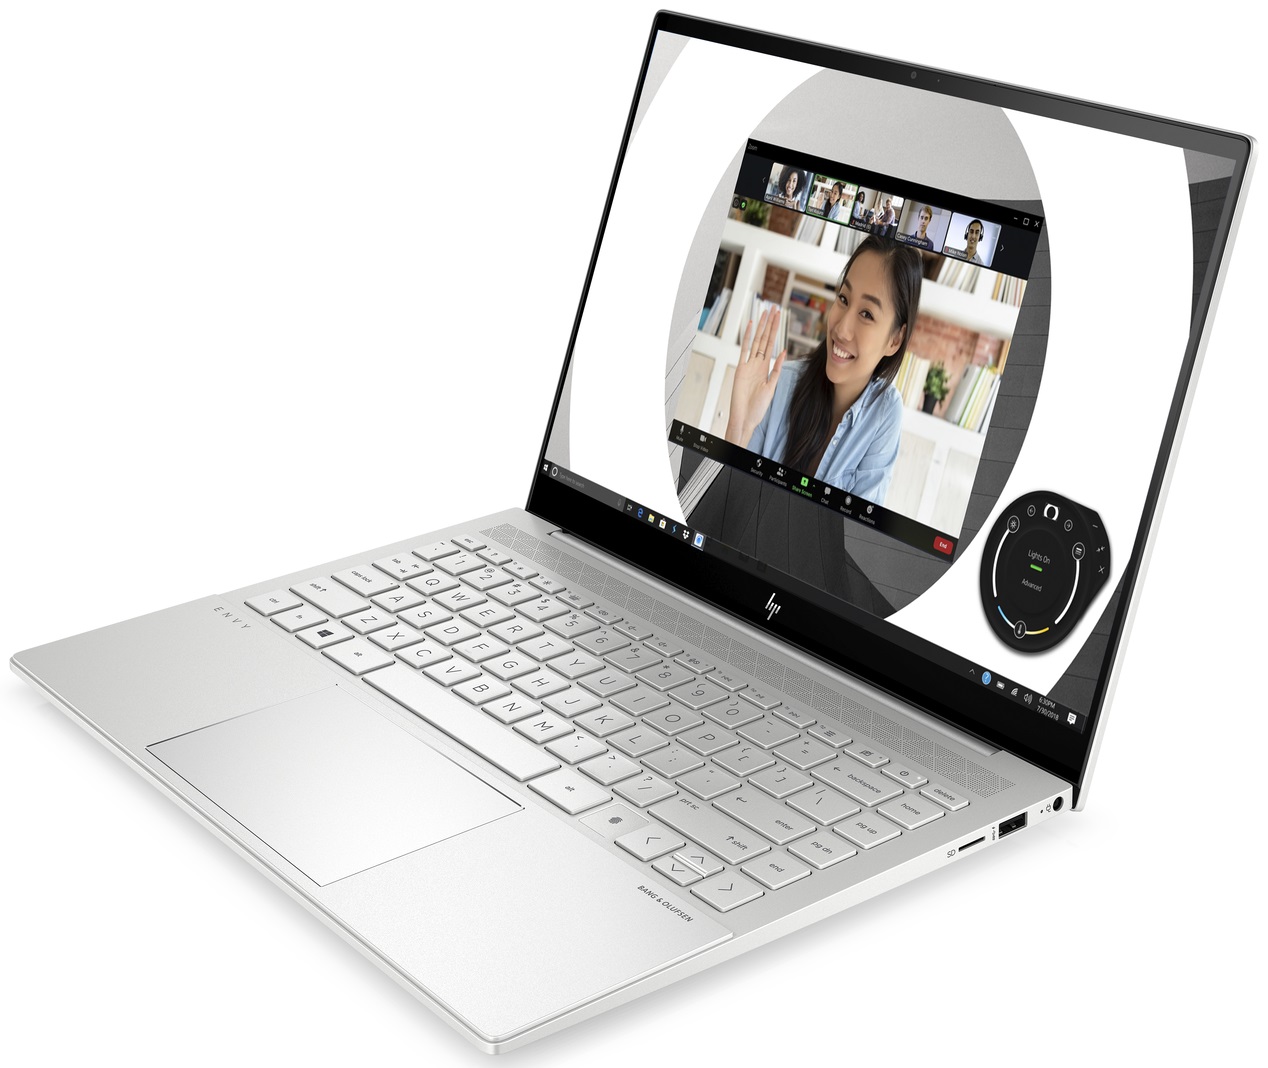 HP Envy (14-eb1000) review - it surprised cooling | LaptopMedia.com